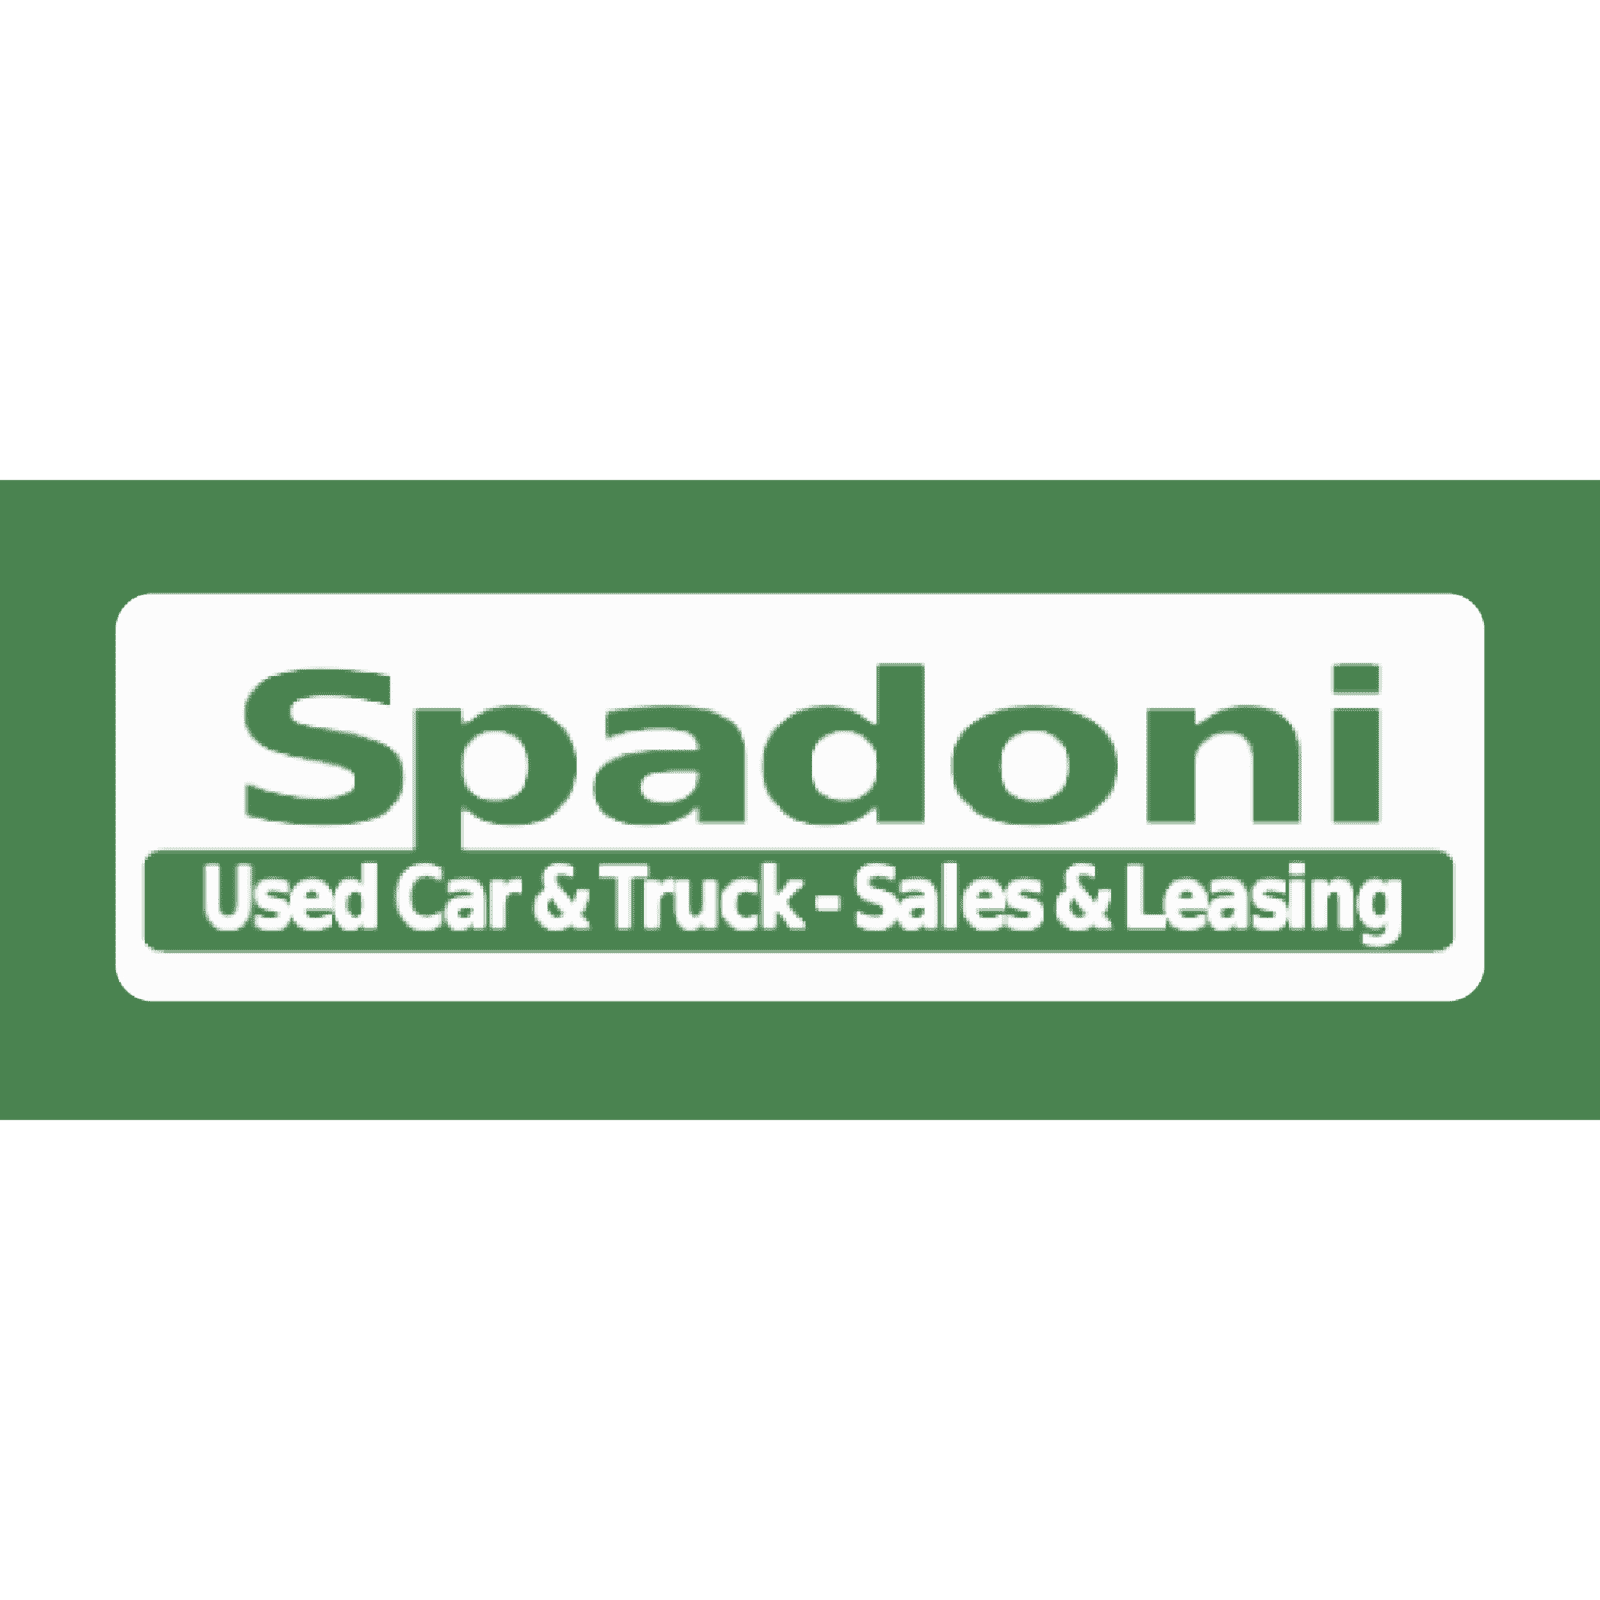 Spadoni Sales and Leasing